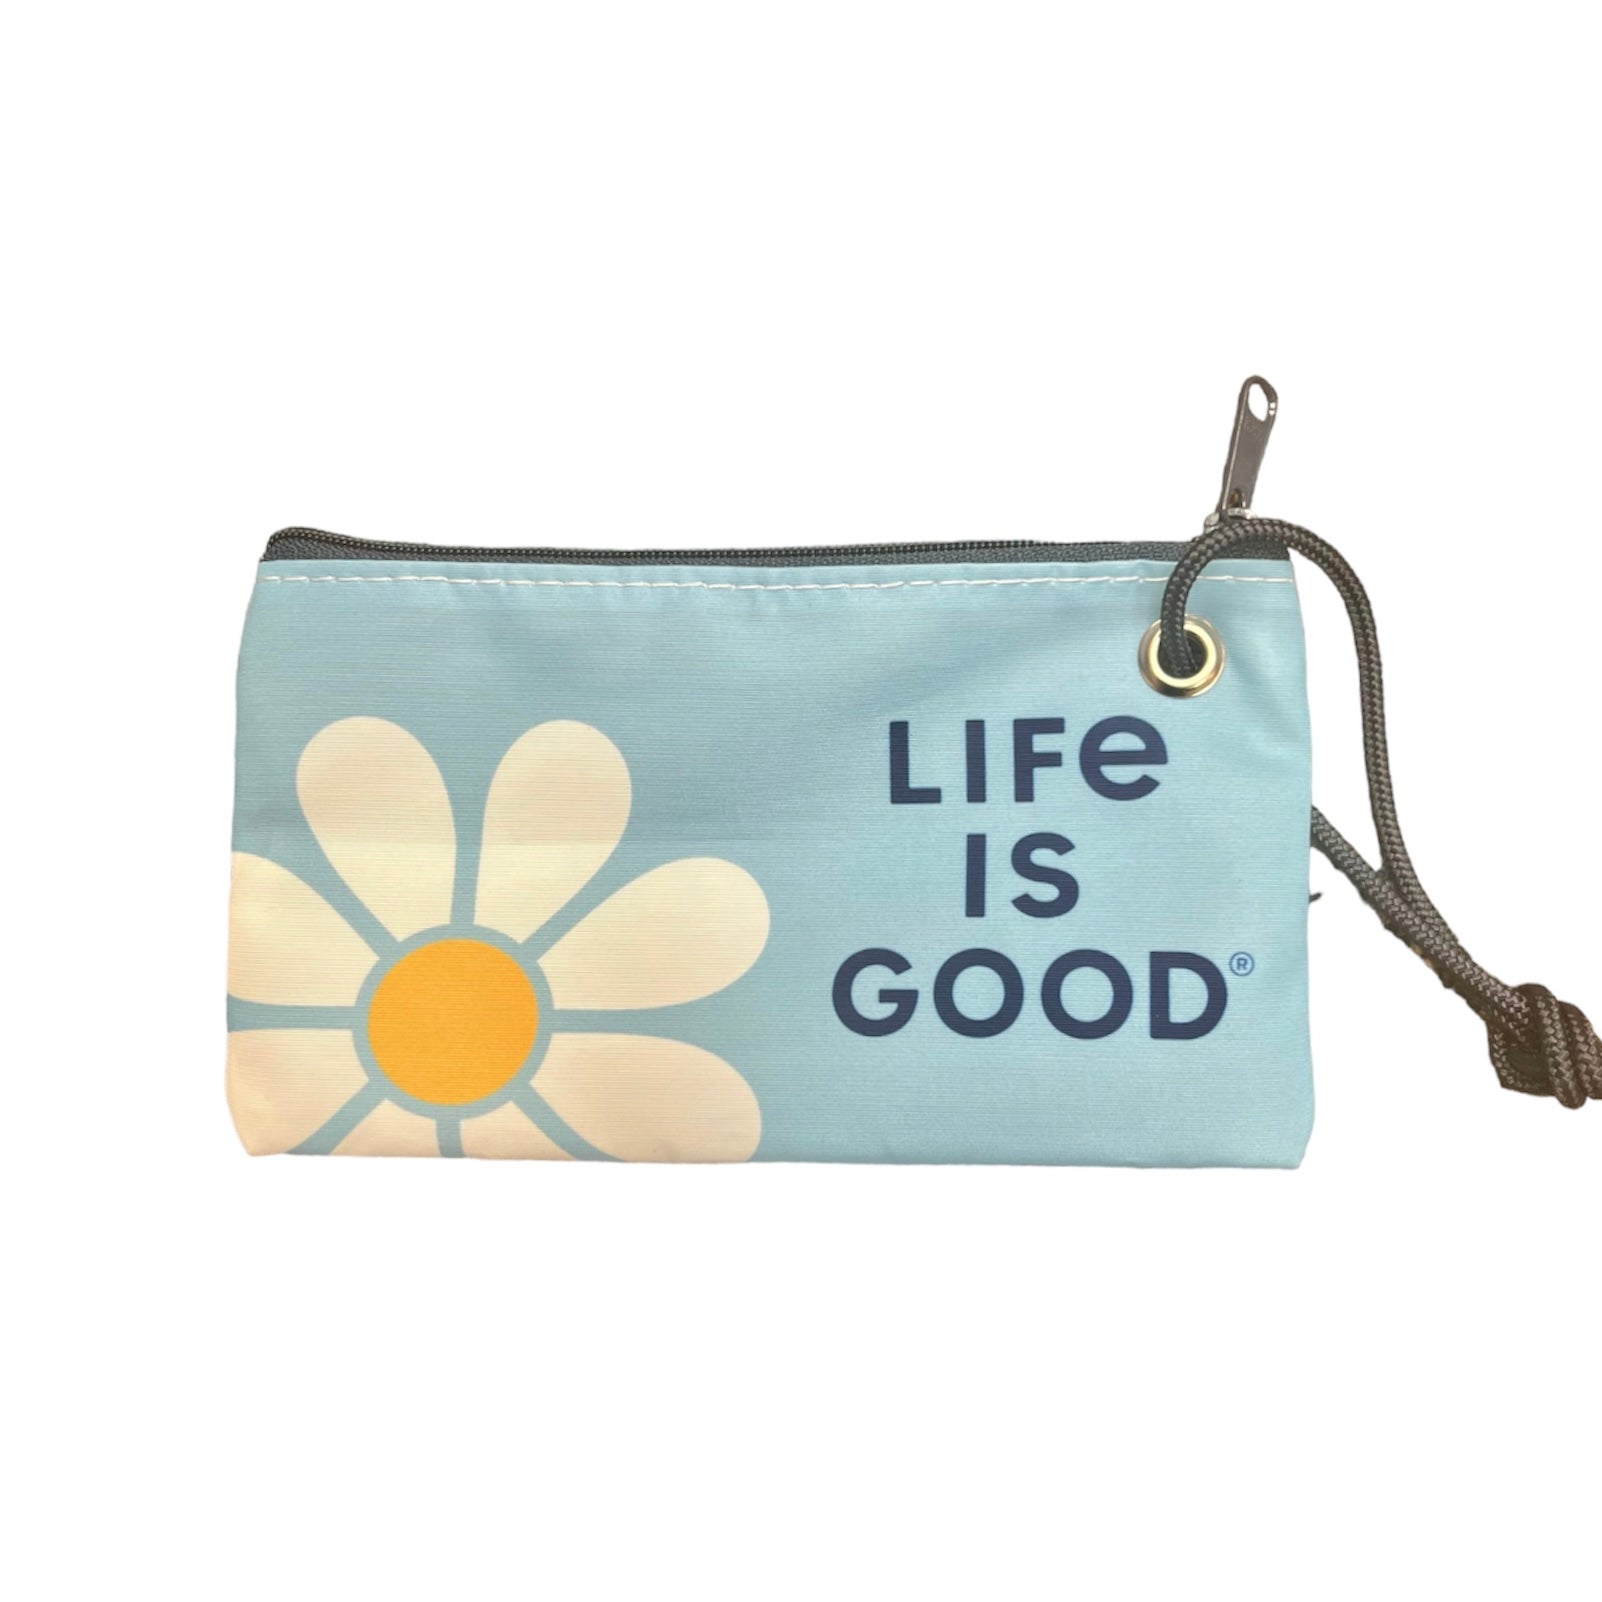 SEA BAG “DAISY LIFE IS GOOD” WRISTLET